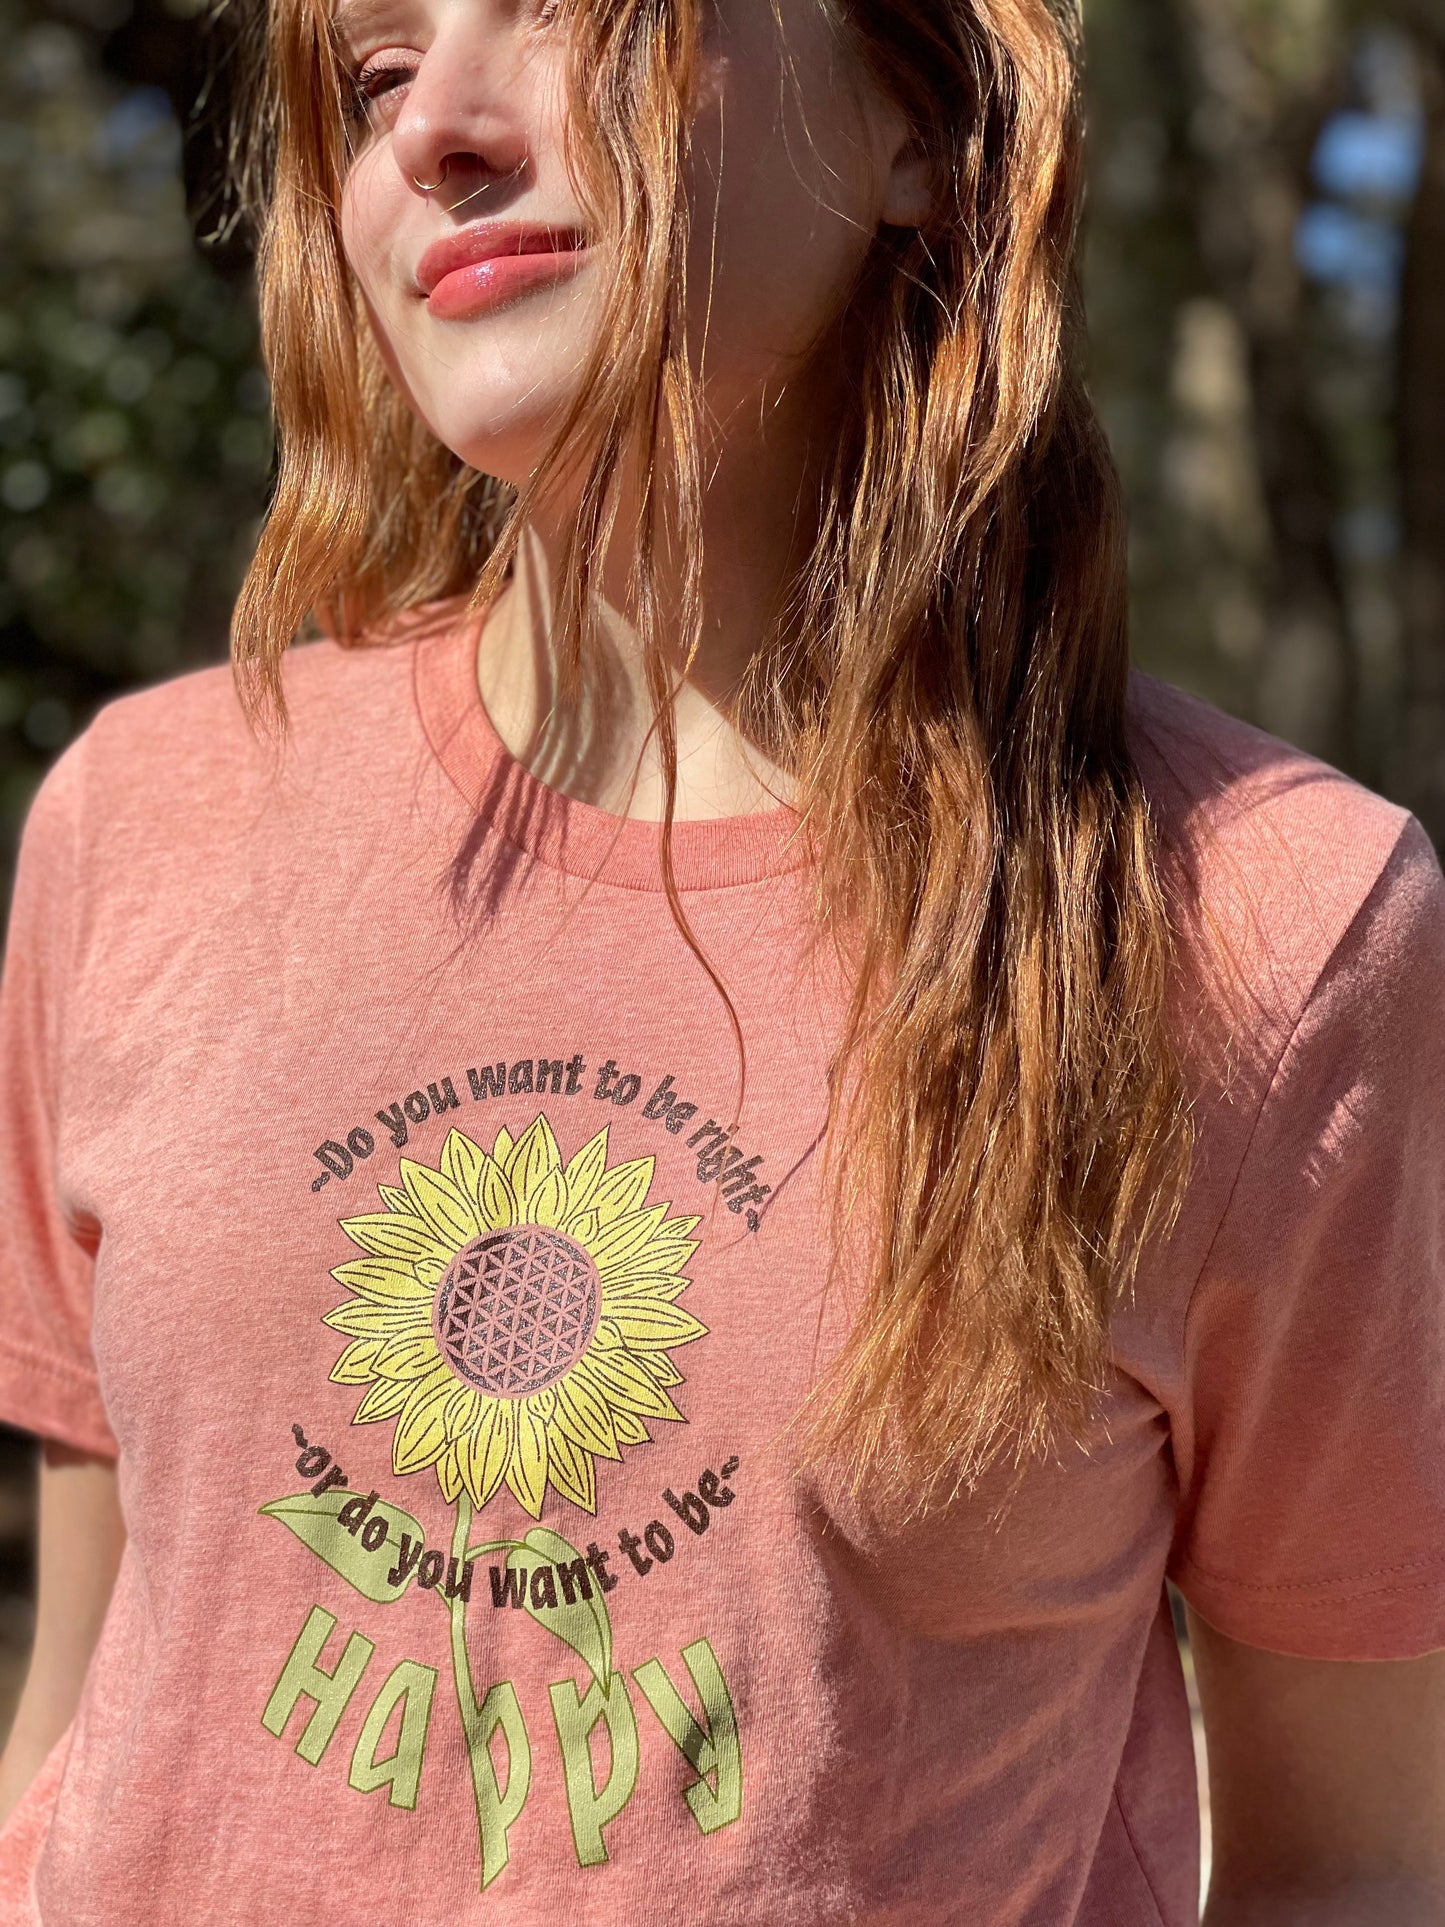 Happy Sunflower T Shirt - Pluff Mud Mercantile